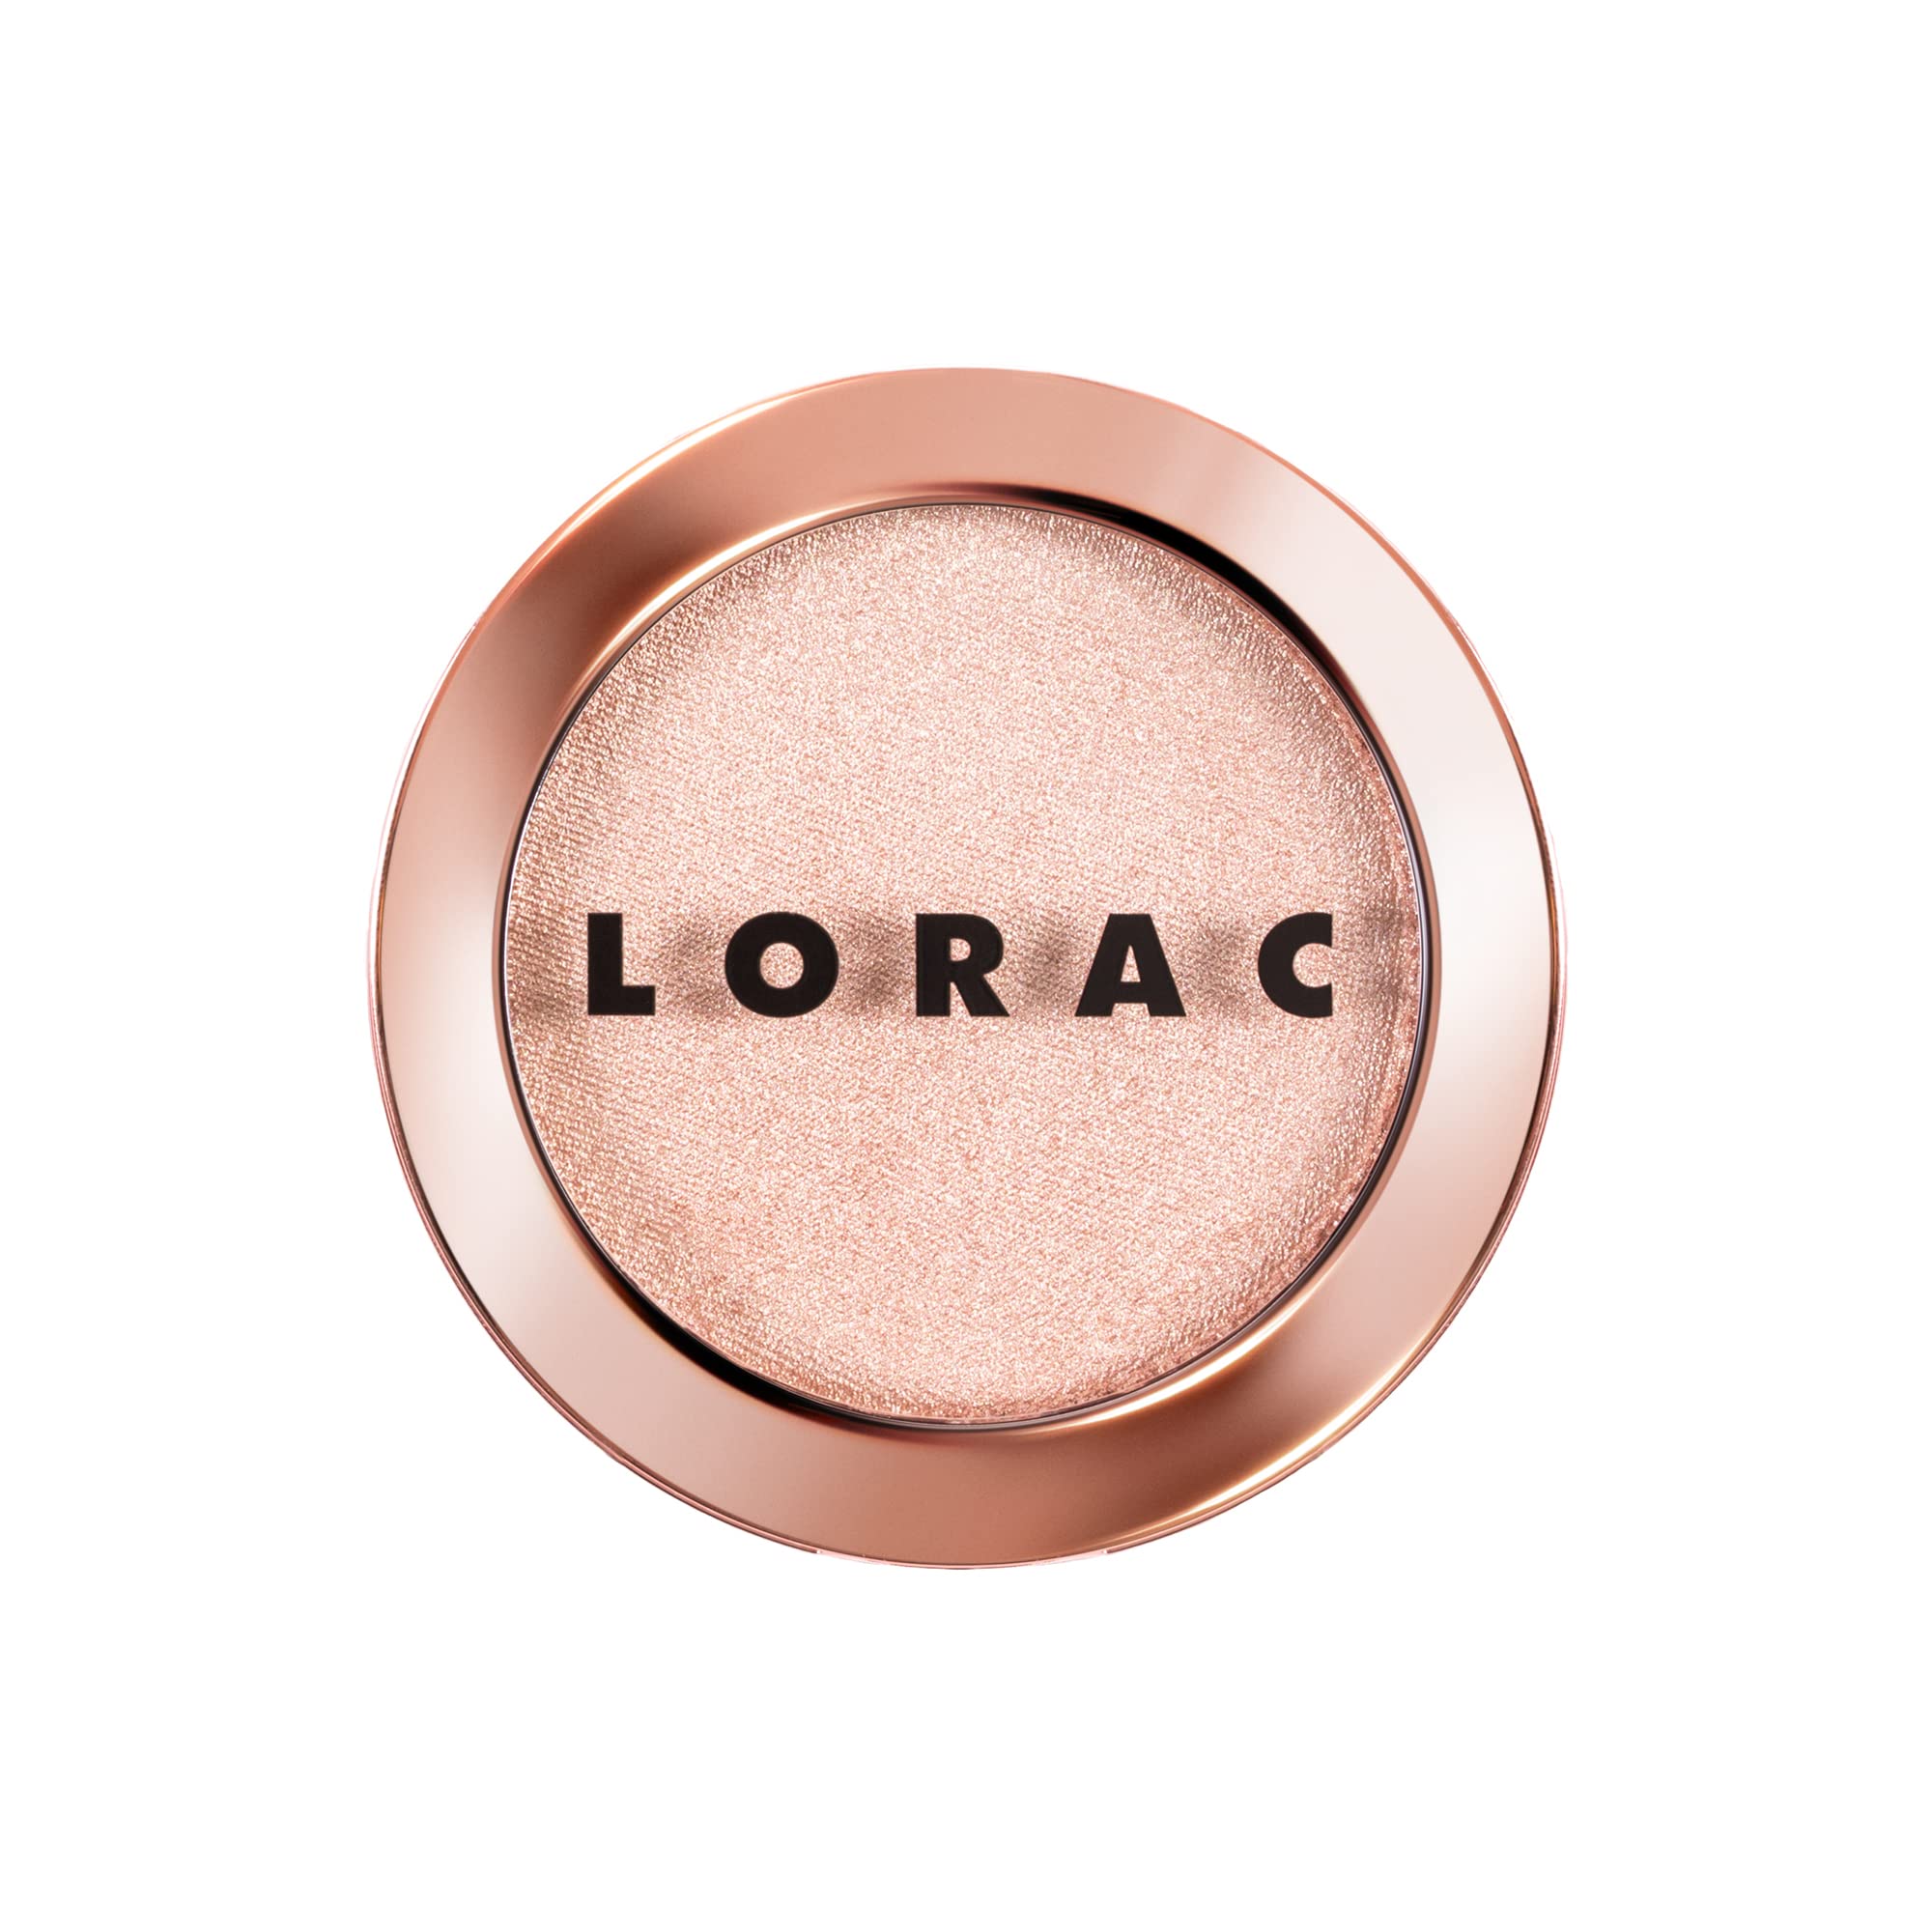 LORAC Light Source Mega Beam Highlighter | Highlighter Makeup Powder | Shimmer Highlighter | Gilded Lily Gold